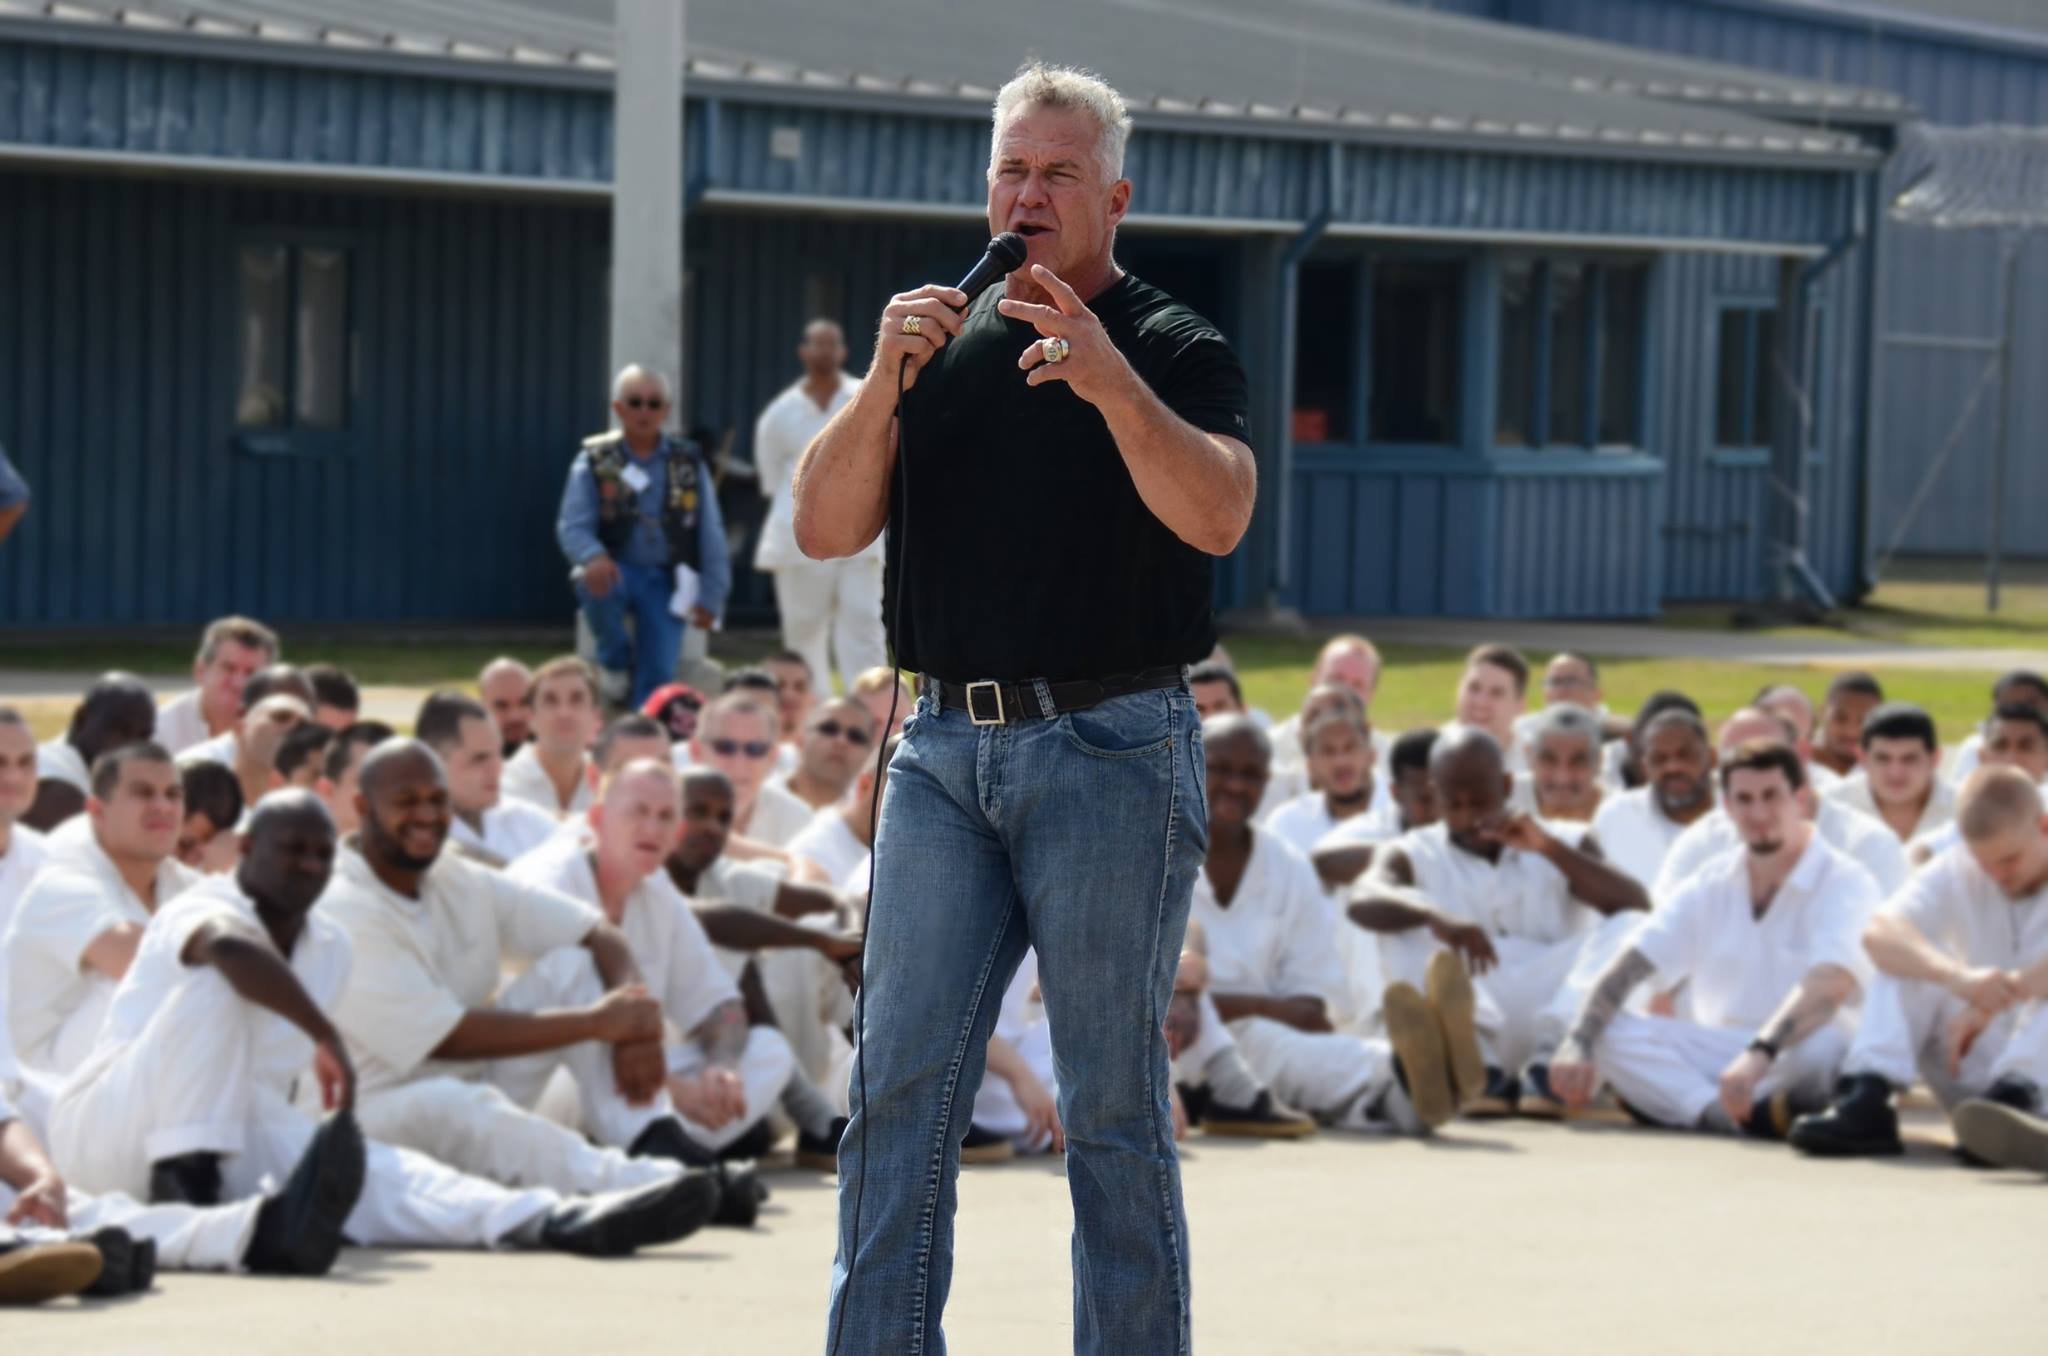 Bruce Collie preaching in prison